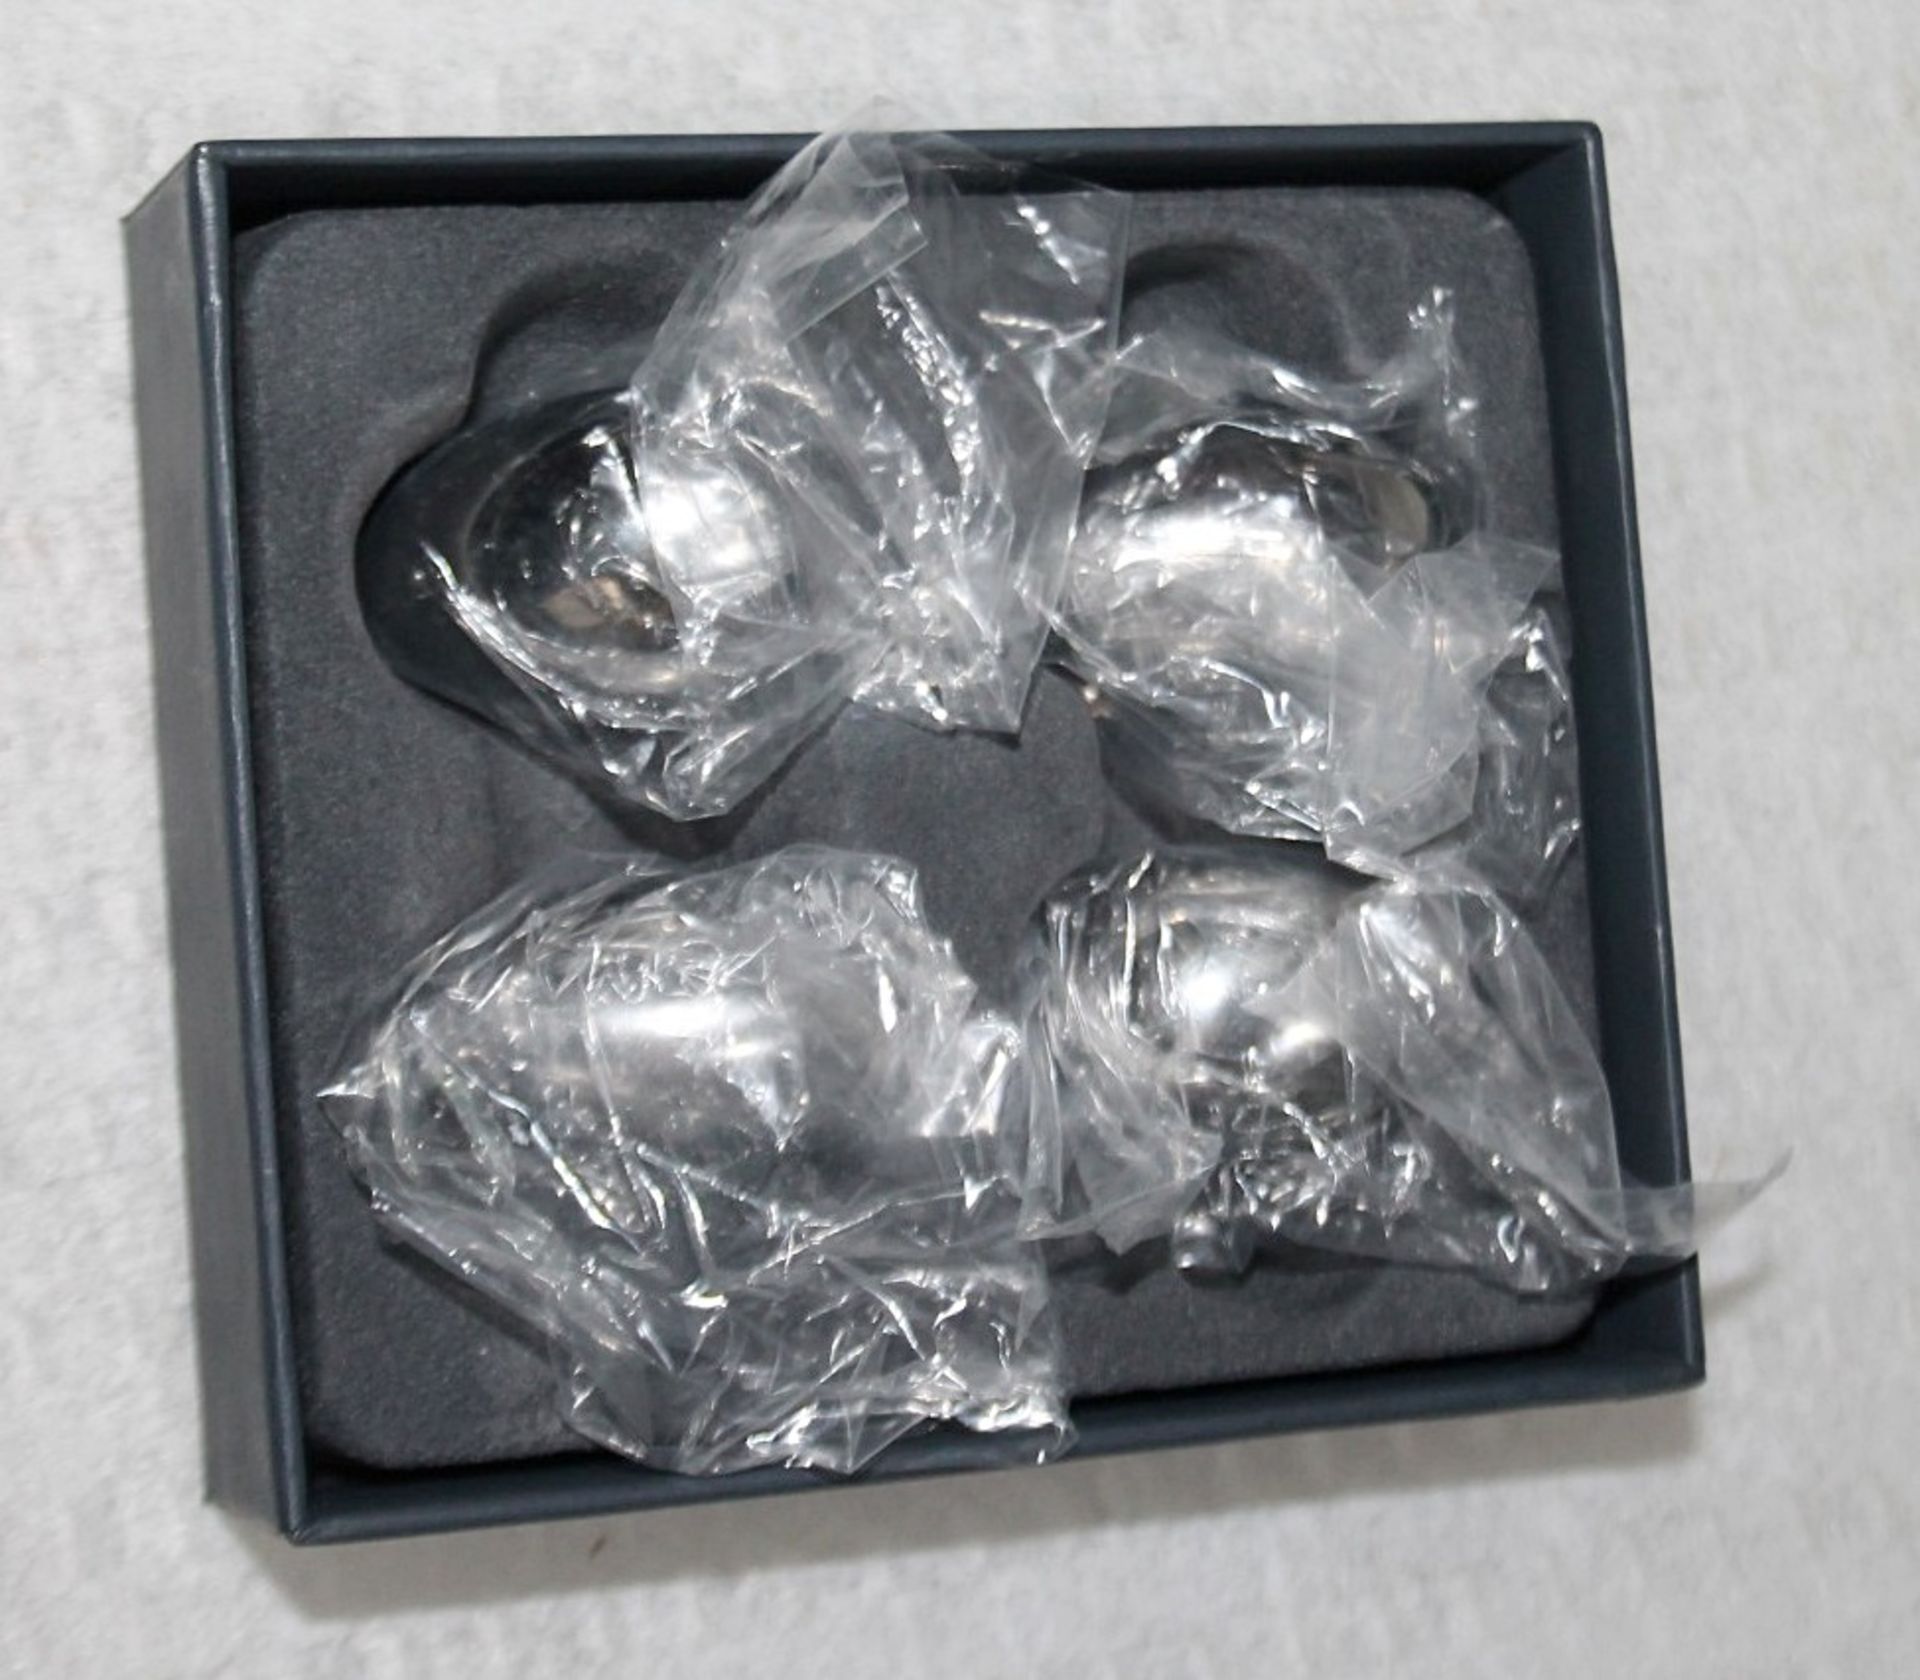 Set of 4 x Georg Jensen Sky Ice Cubes - Unused Boxed Stock - Ref: HHW310/NOV21/WH2/C4 - CL987 - - Image 6 of 6